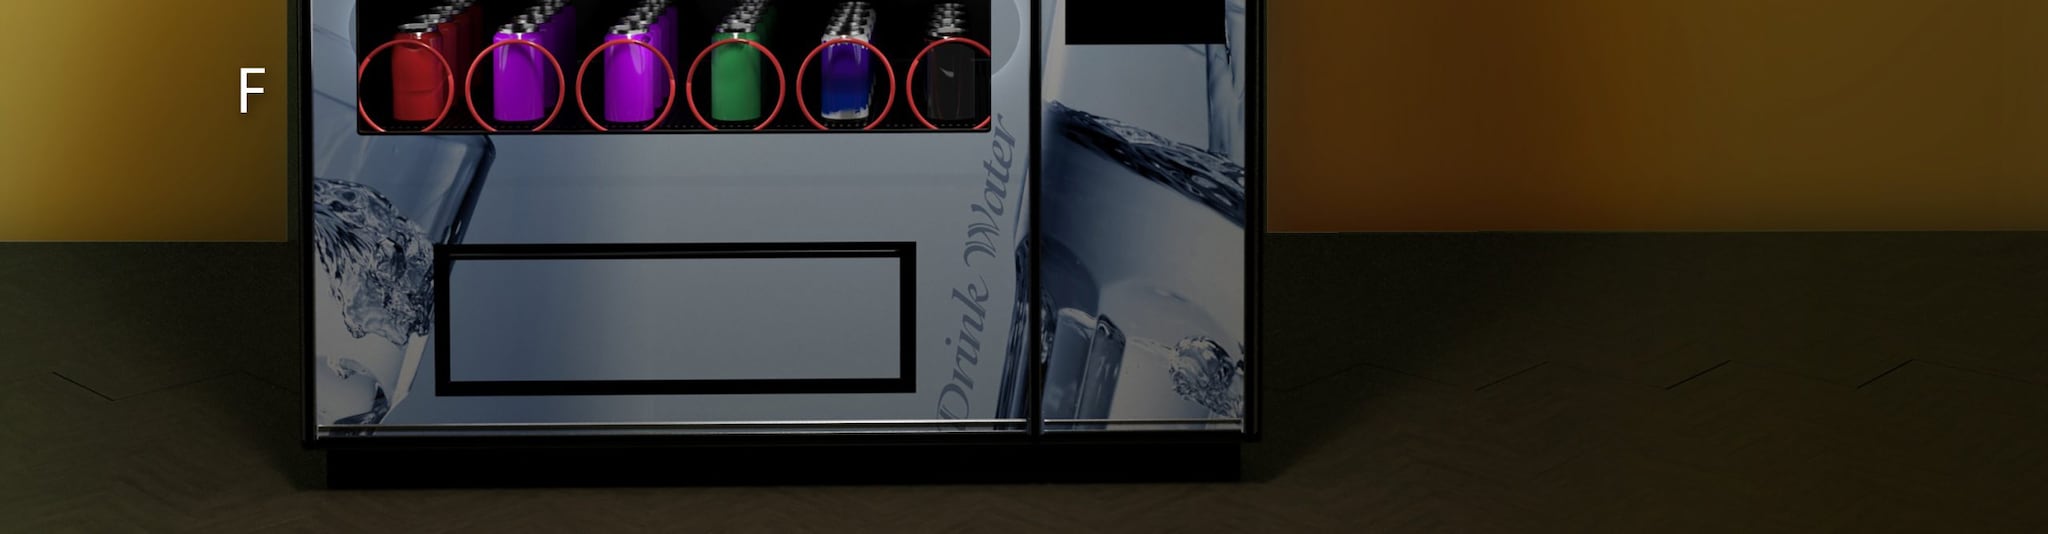 Row F - Beverage vending machine